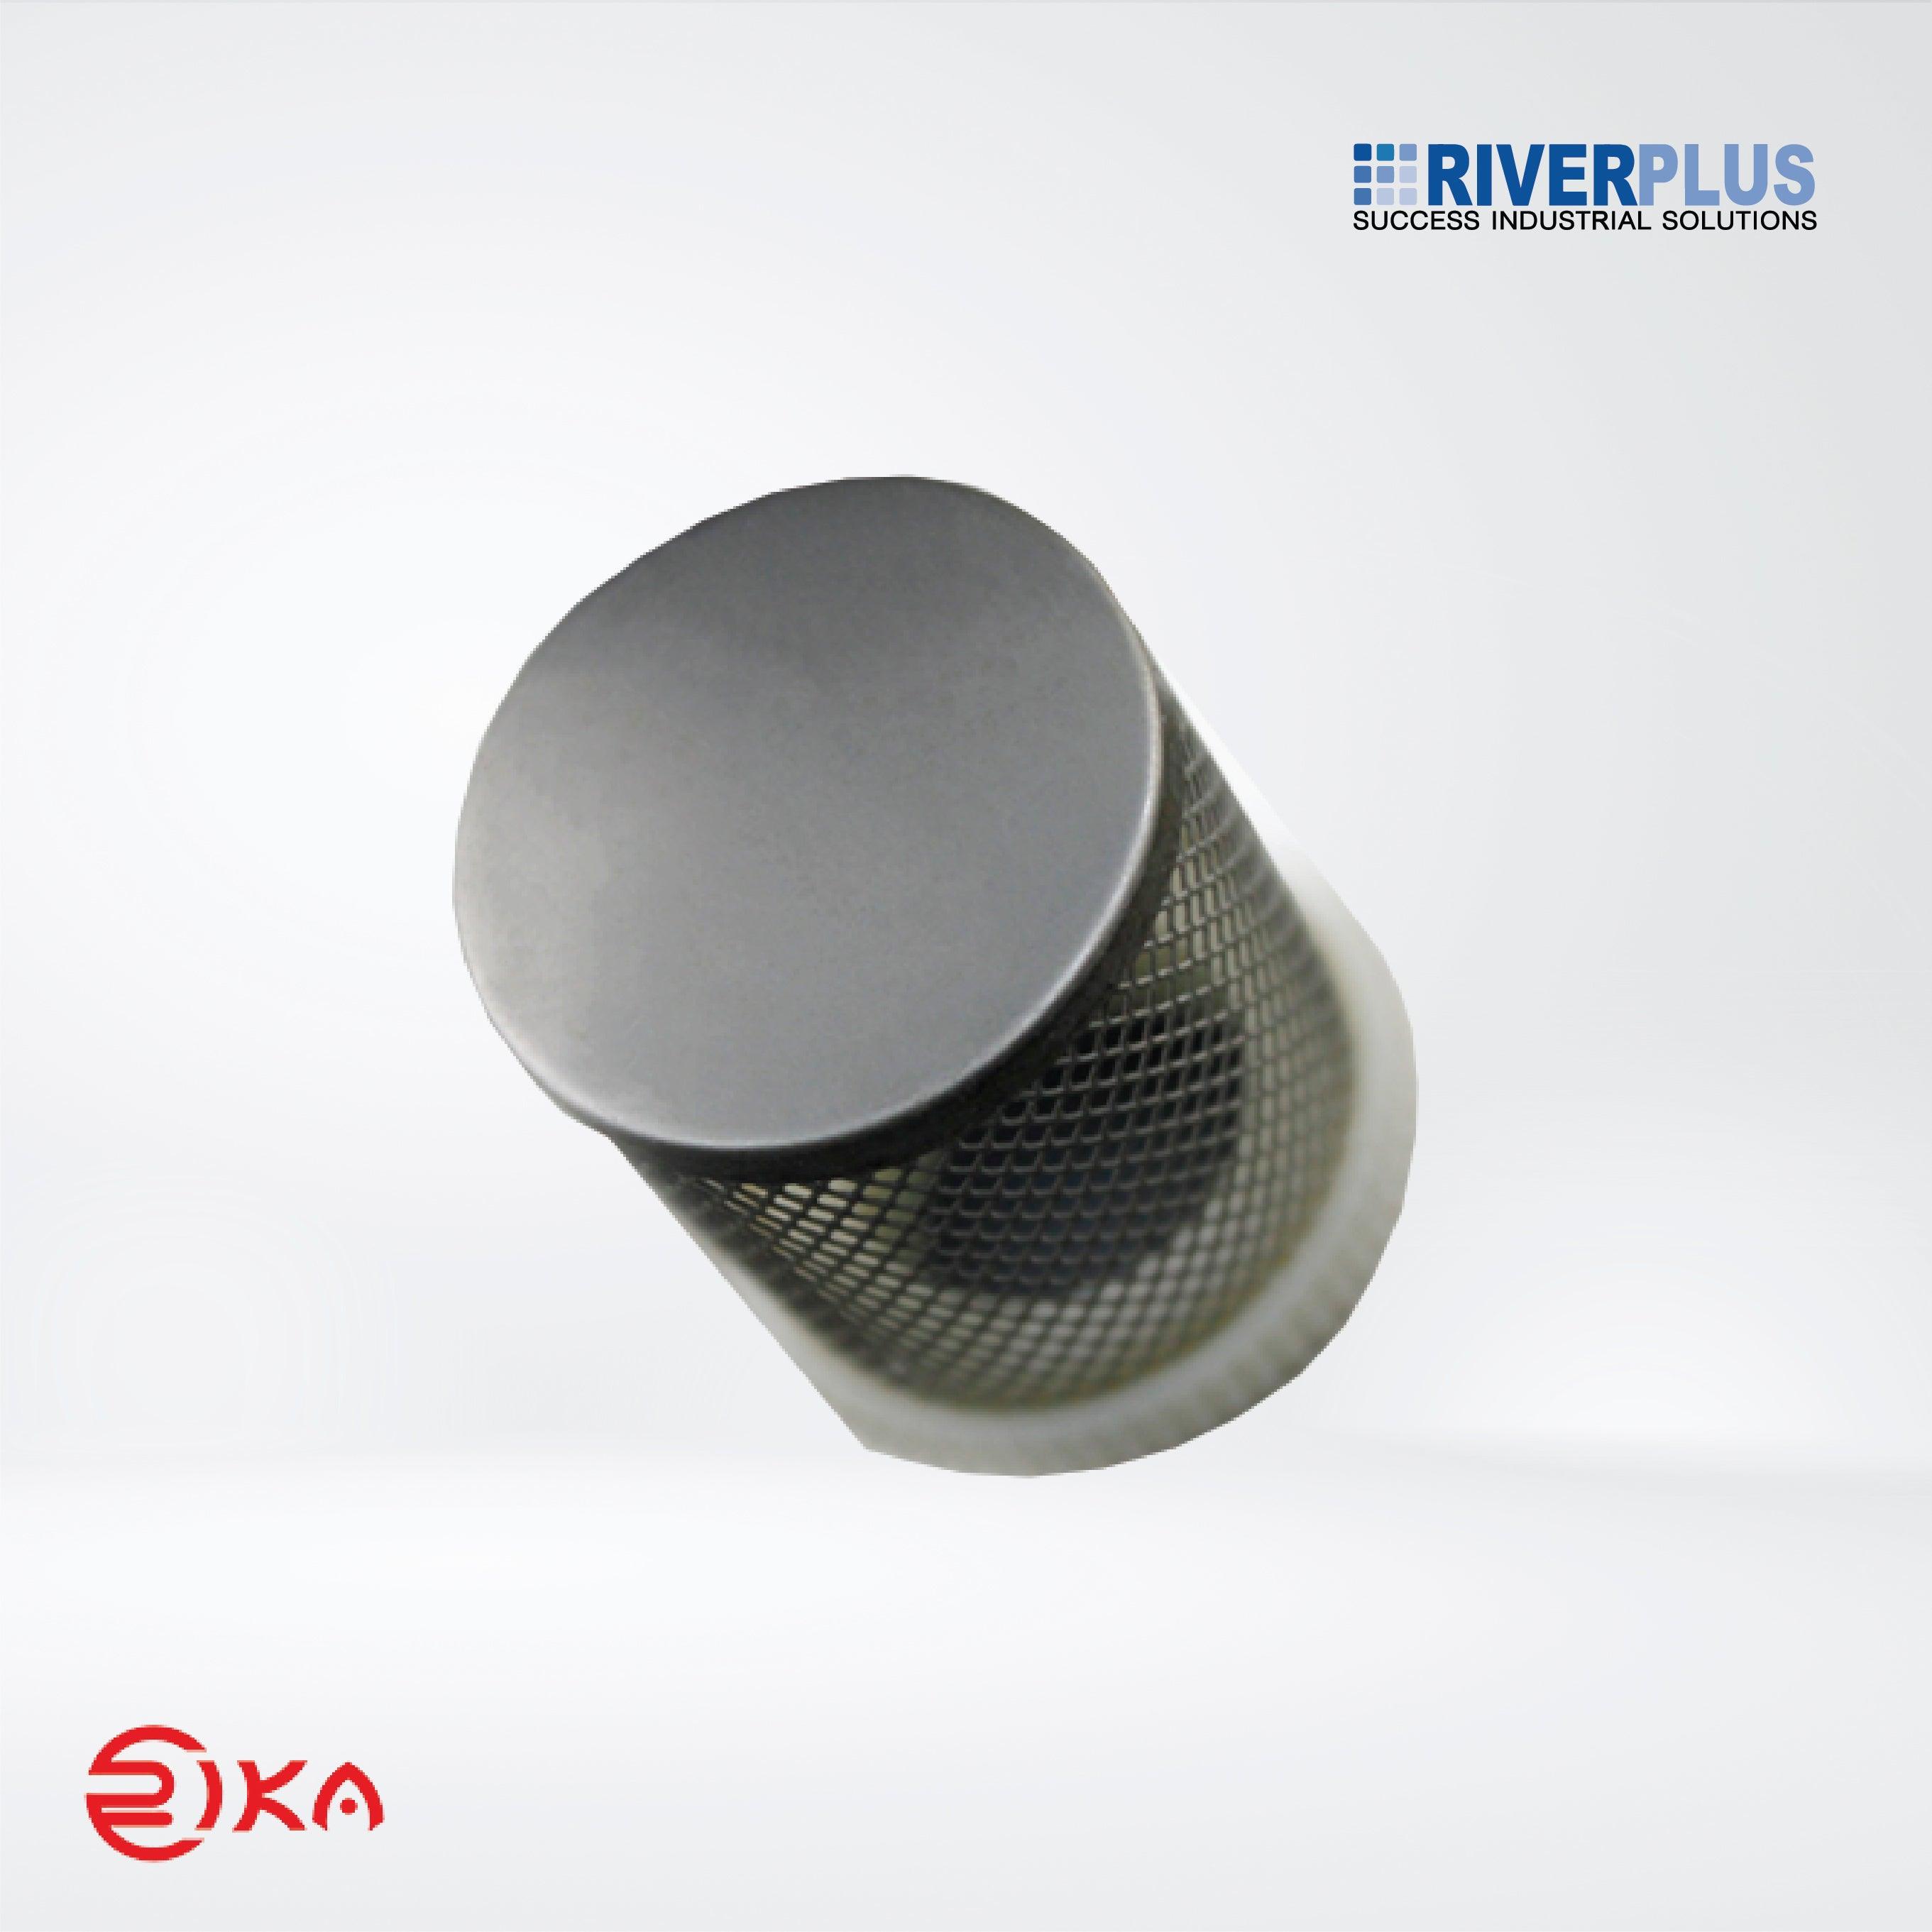 RK400-01D Tipping Bucket Rainfall Sensor - Riverplus